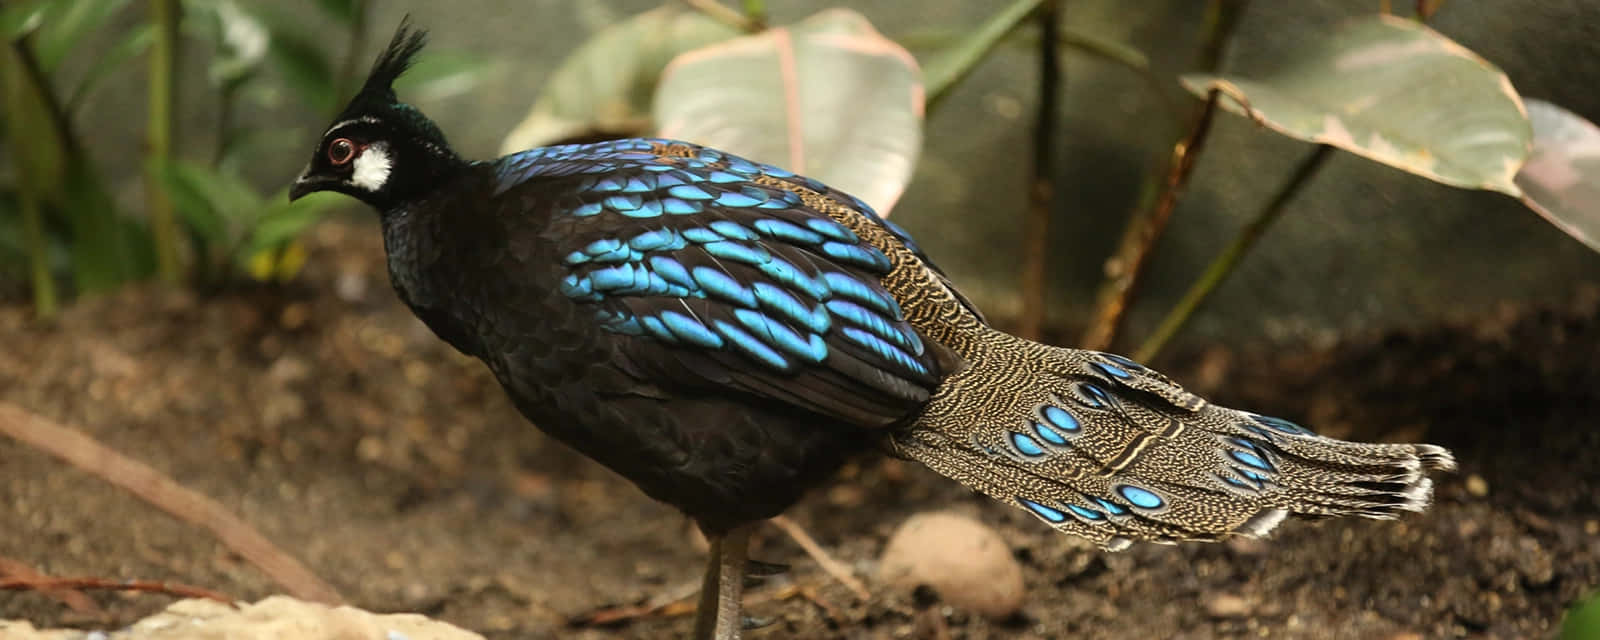 A beautiful, dazzling peacock